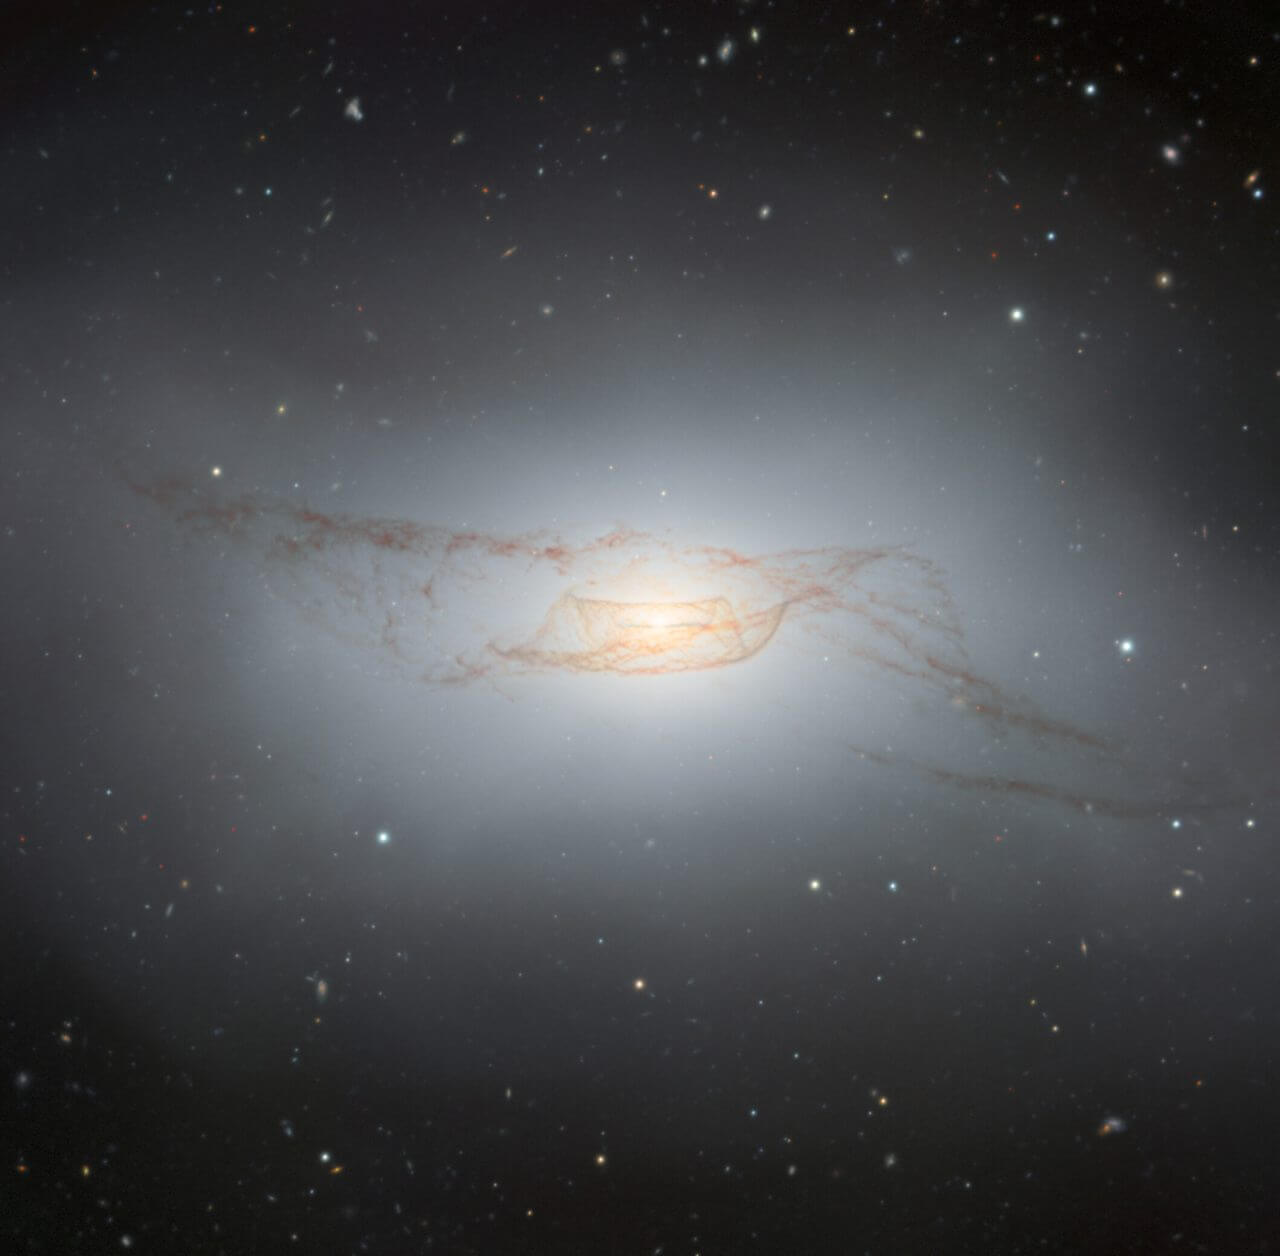 galaxy-NGC4753-Gemini-South-NOIRLab-noirlab2403a.jpg